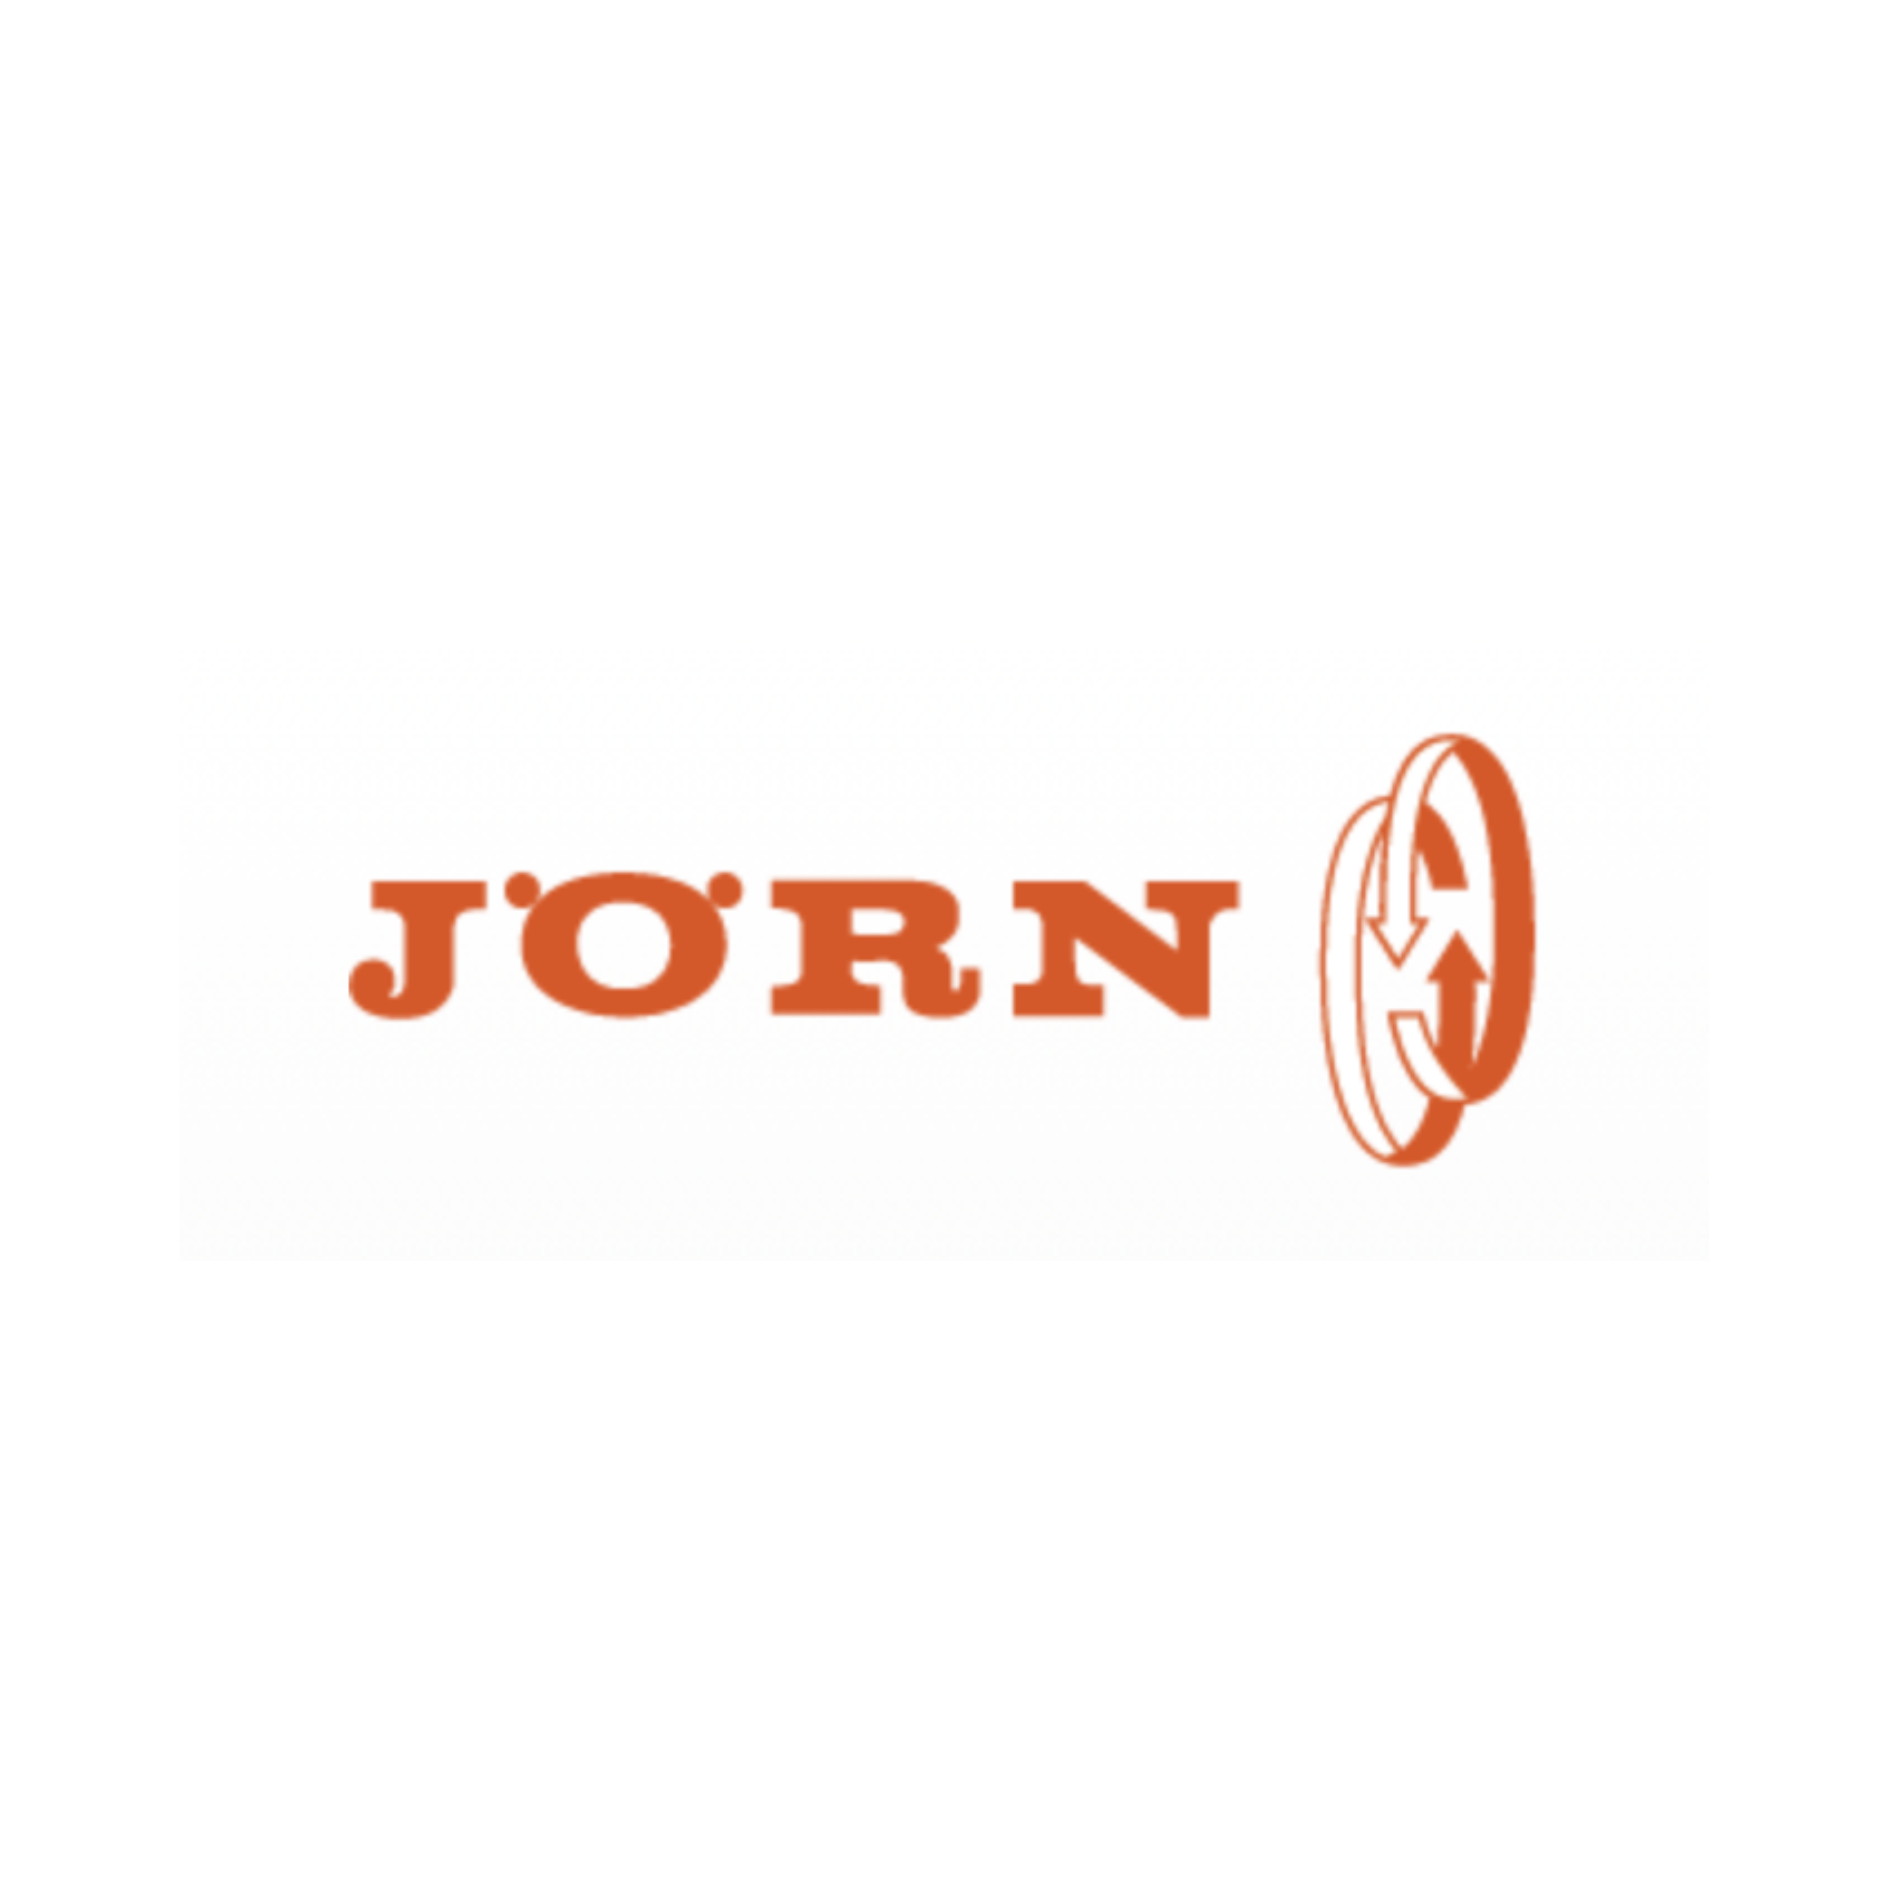 Secrets of Jörn: The Innovation Process at Jörn